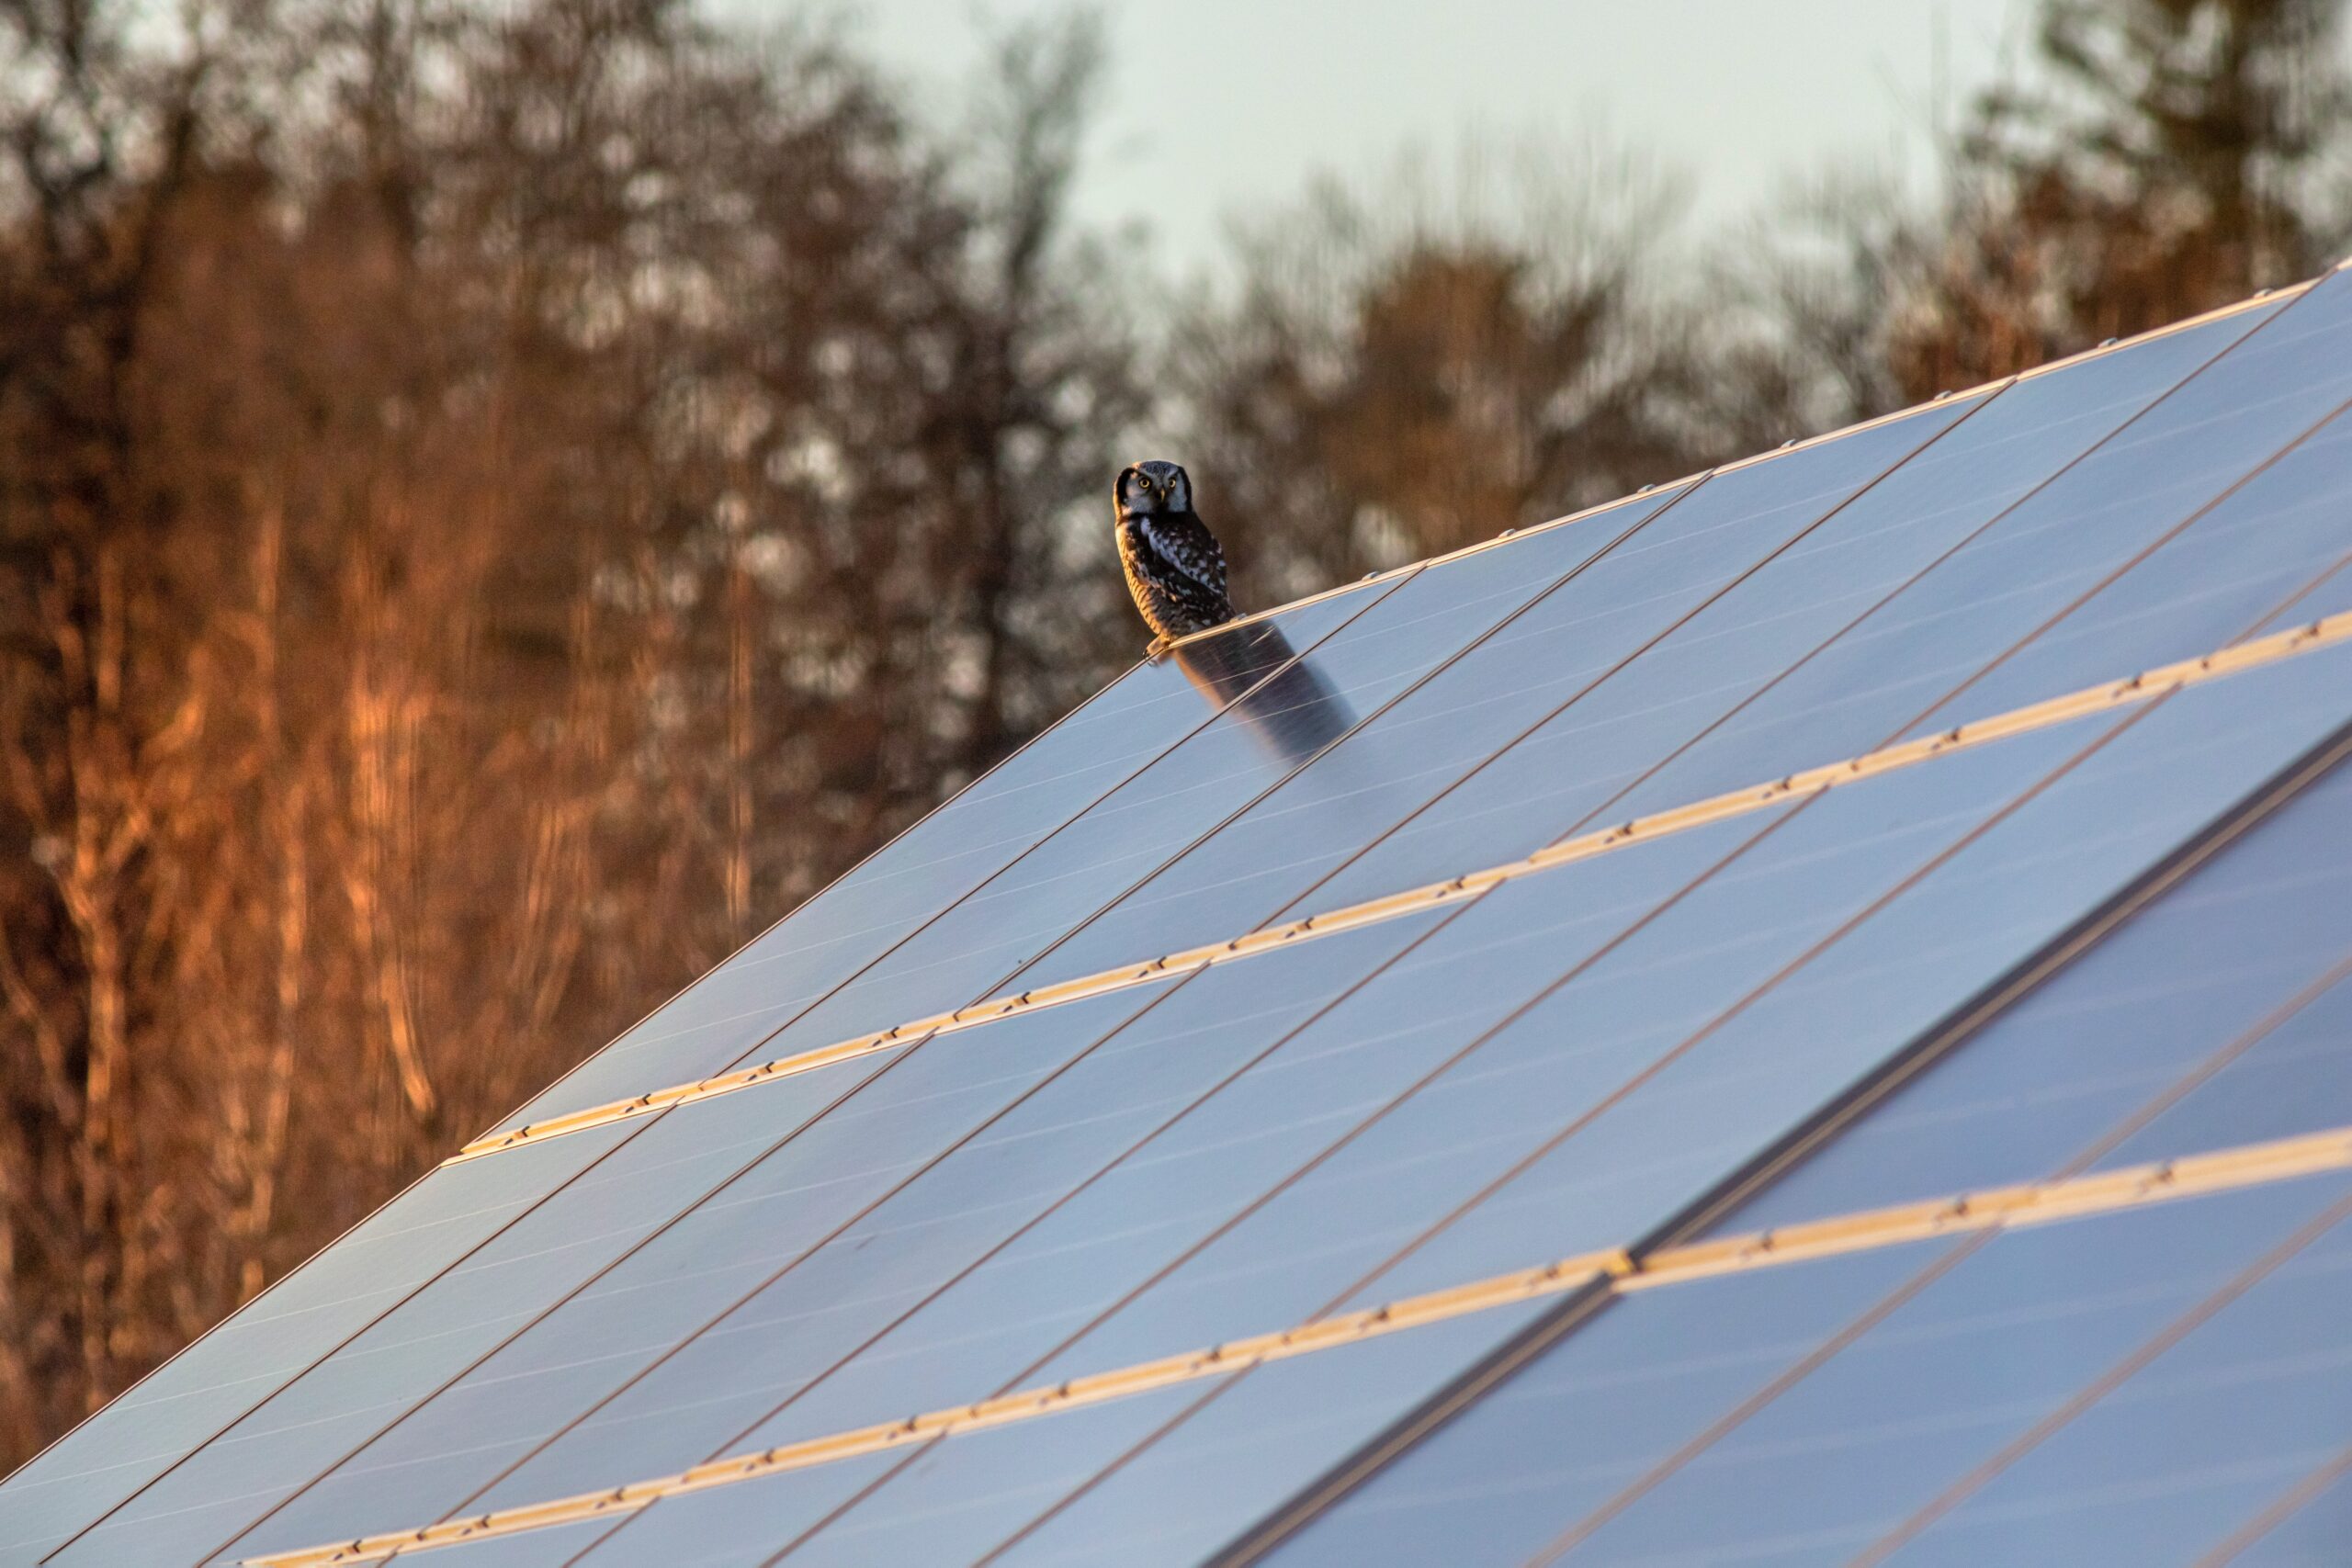 Photo by Erik Karits: https://www.pexels.com/photo/owl-perching-on-solar-panel-roof-10268580/